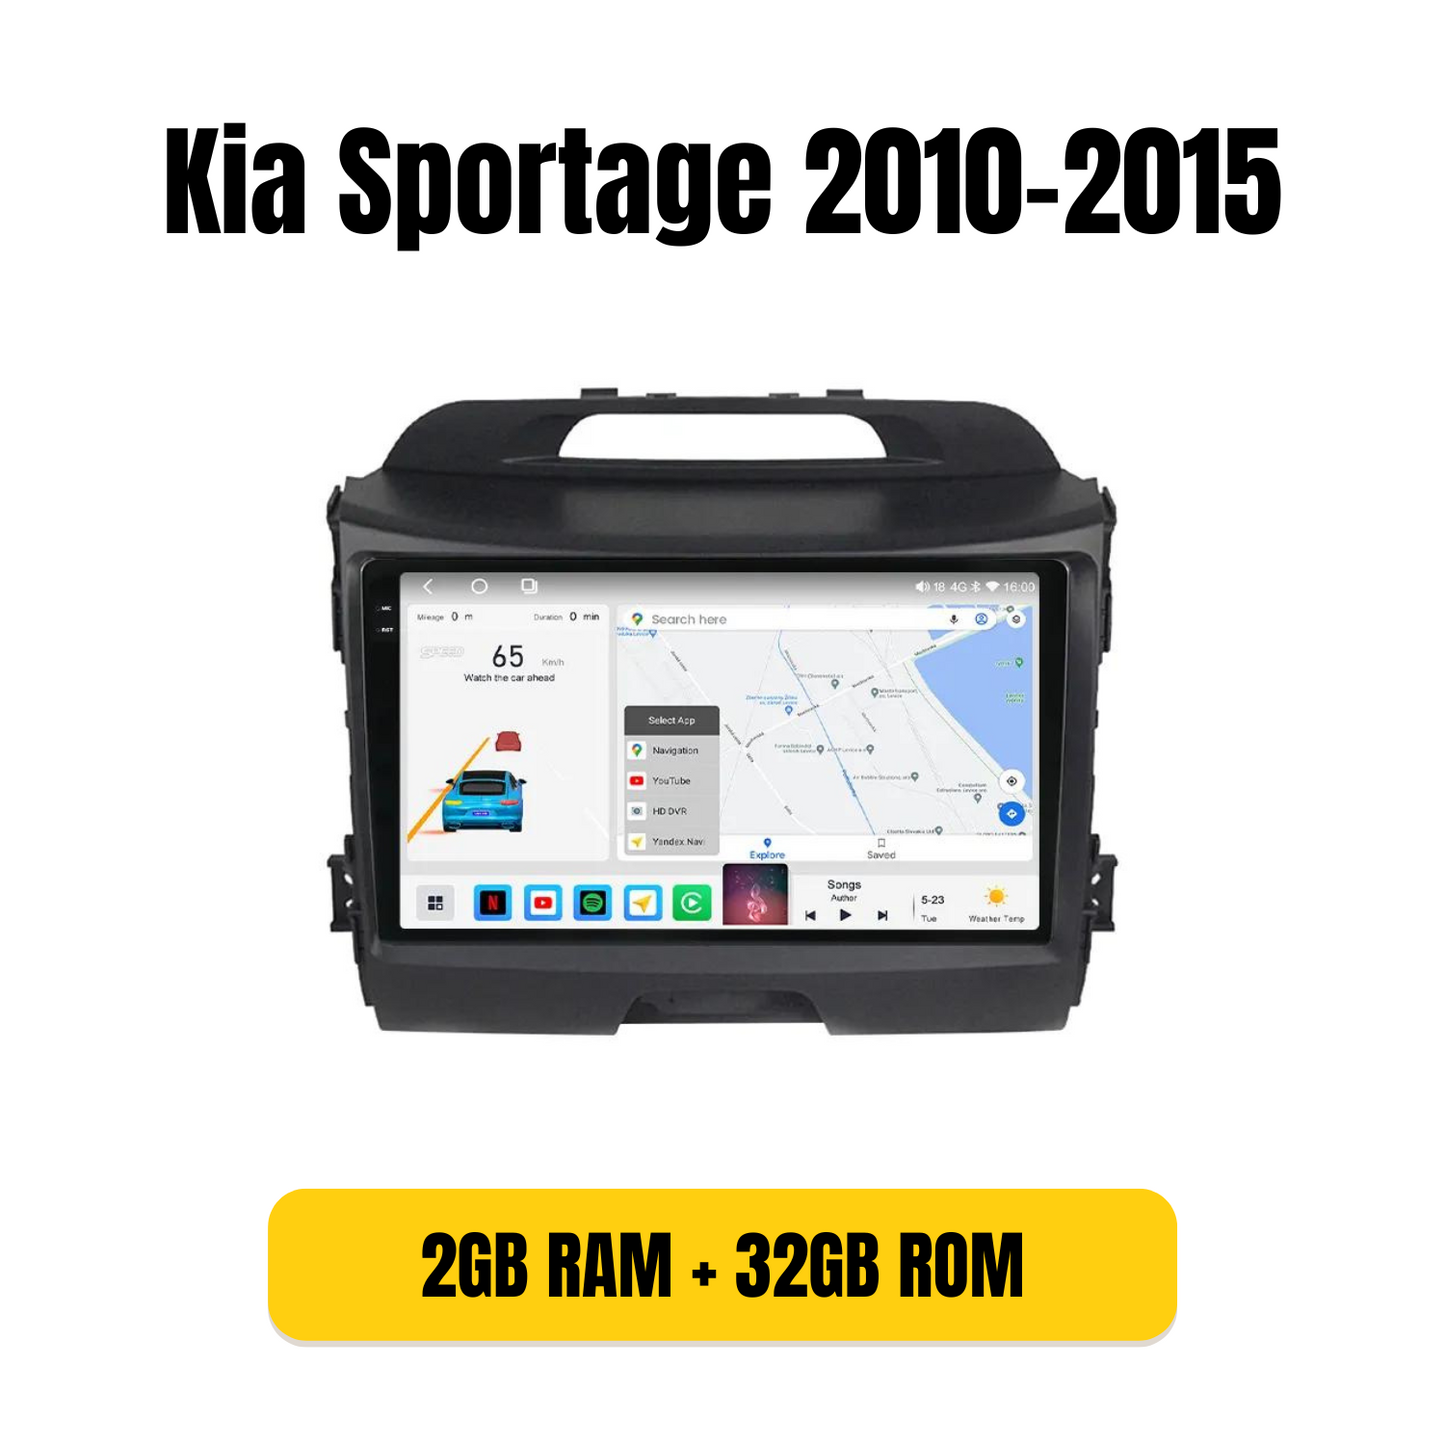 Combo RADIO + BISEL - Kia Sportage 2010-2015 - 2GB RAM + 32GB ROM - Pantalla IPS